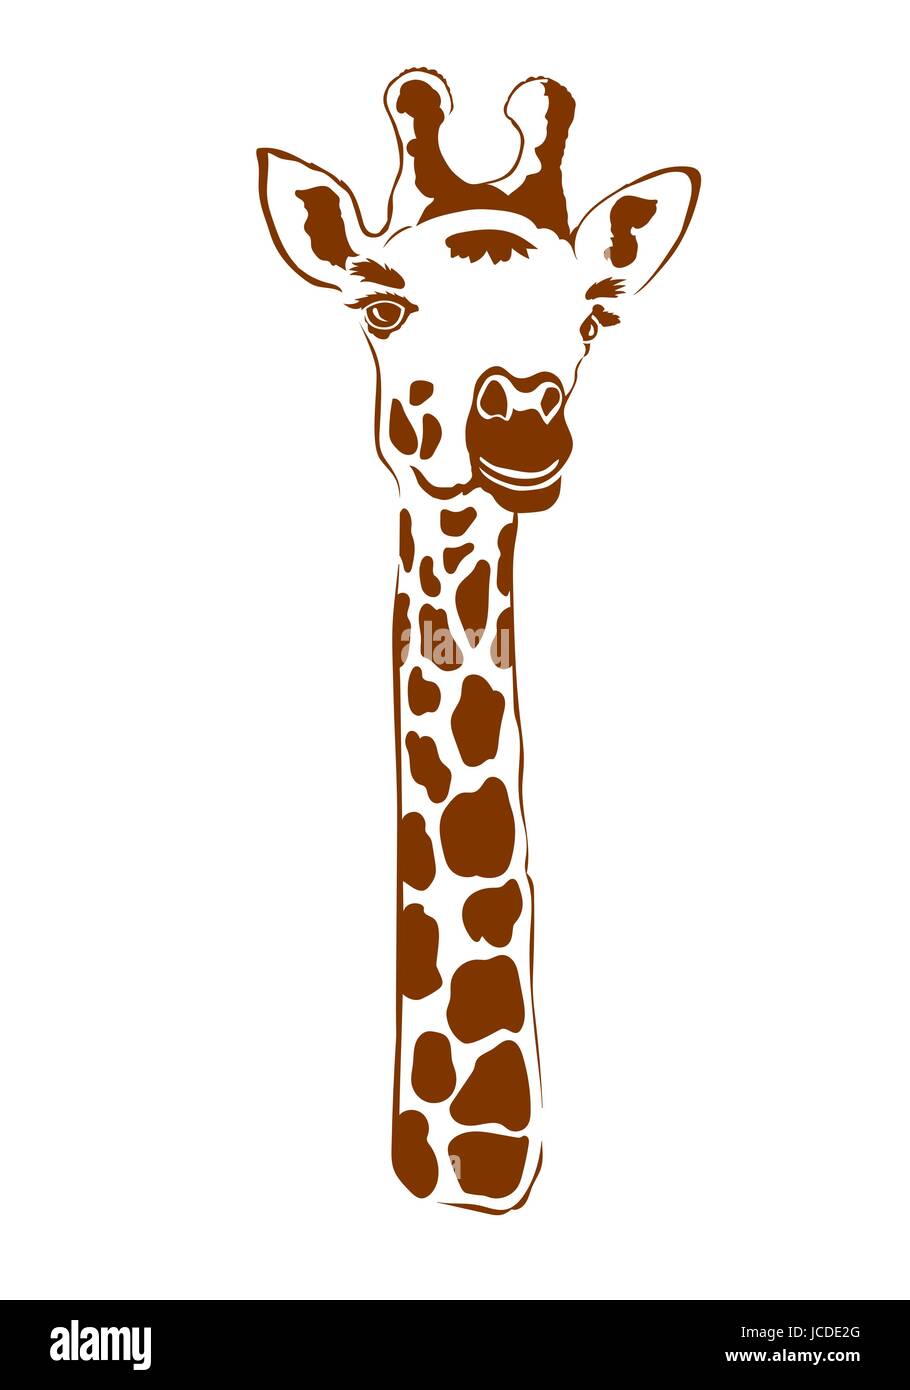 Giraffe on white background isolated Stock Vector